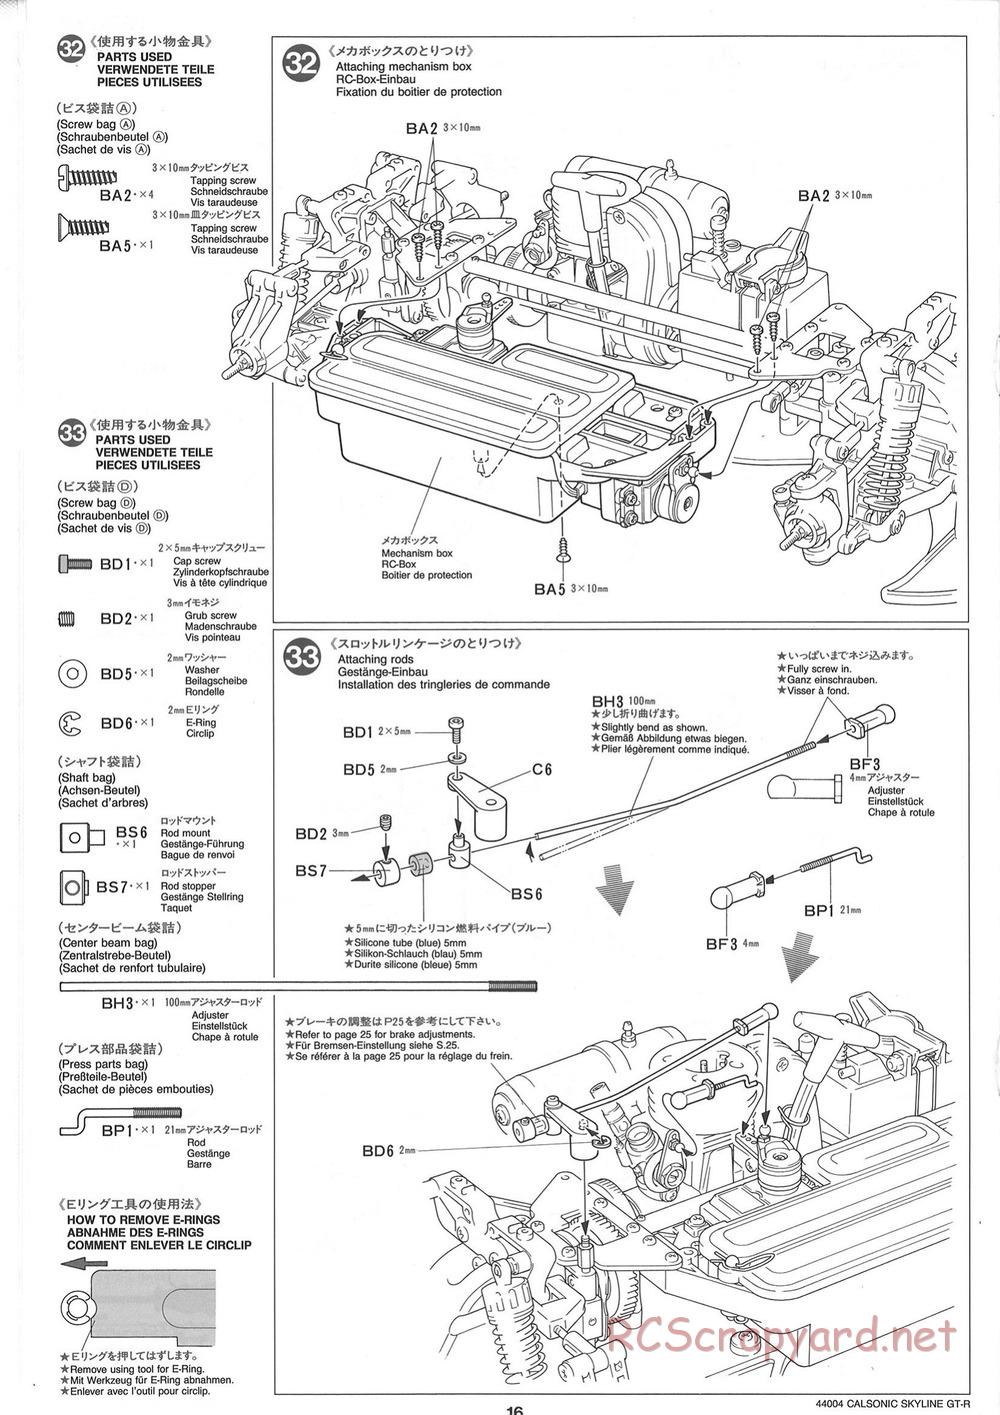 Tamiya - Calsonic GT-R - TGX Mk.1 Chassis - Manual - Page 16